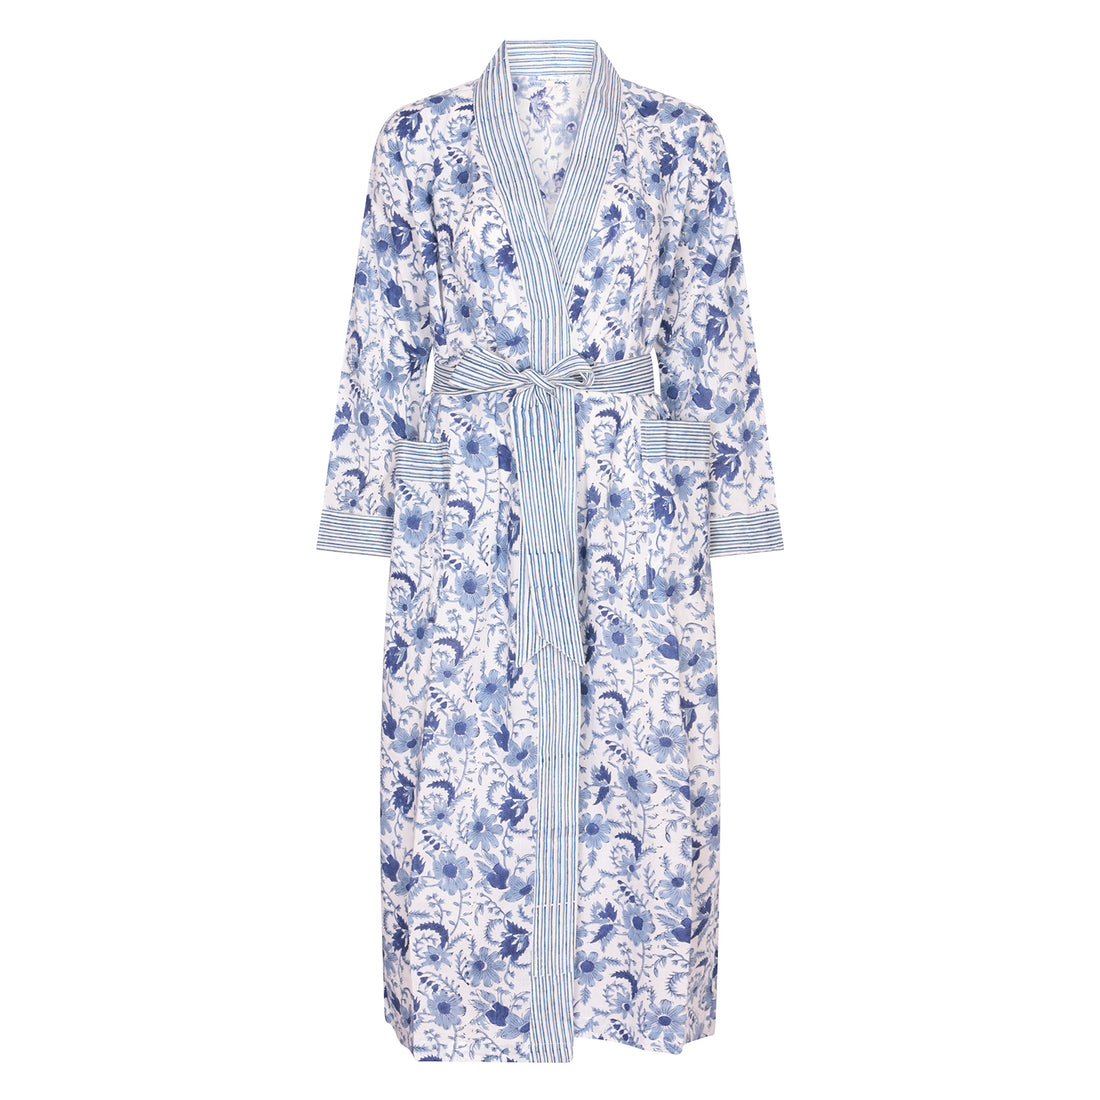 Hand Printed Cotton Kimono Robe - Cornflower Blue